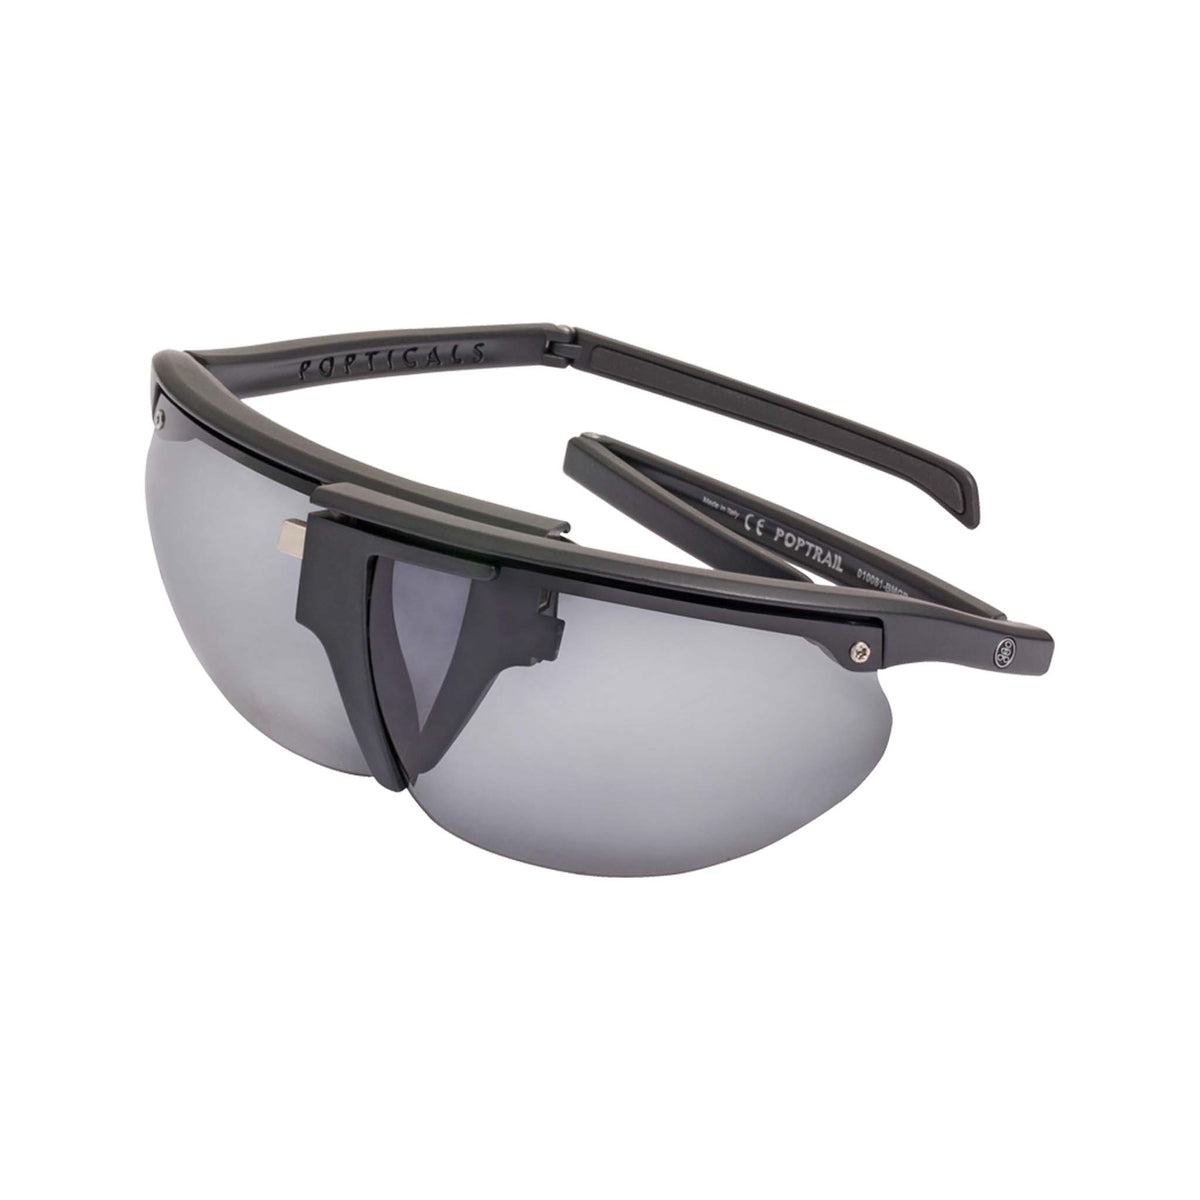 Popticals, Premium Compact Sunglasses, PopTrail, 010081-BMGP, Polarized Sunglasses, Matte Black Frame, Gray Lenses, Spider View